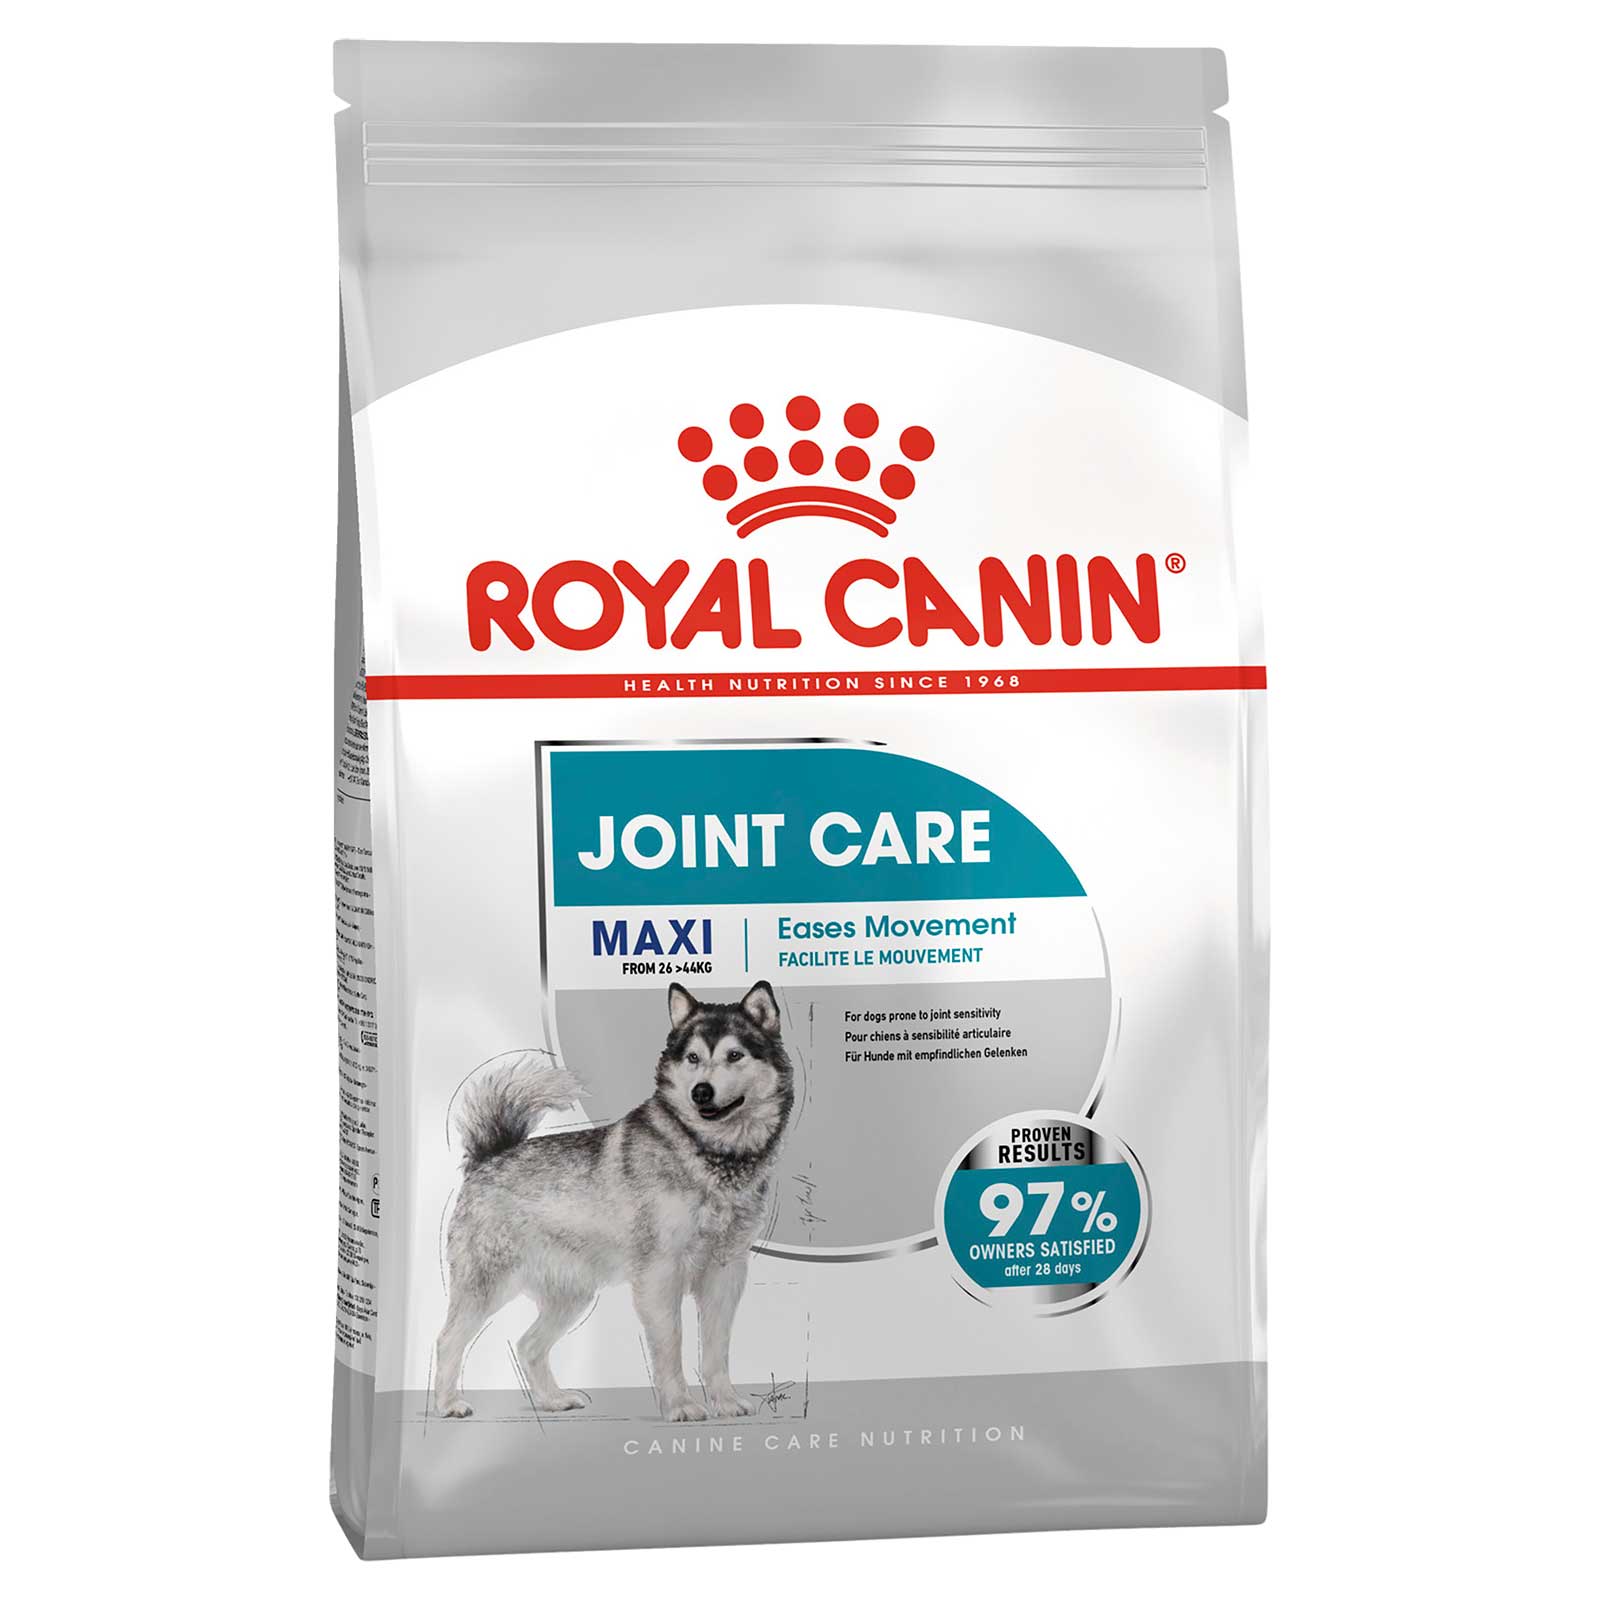 Royal Canin Dog Food Joint Care Maxi